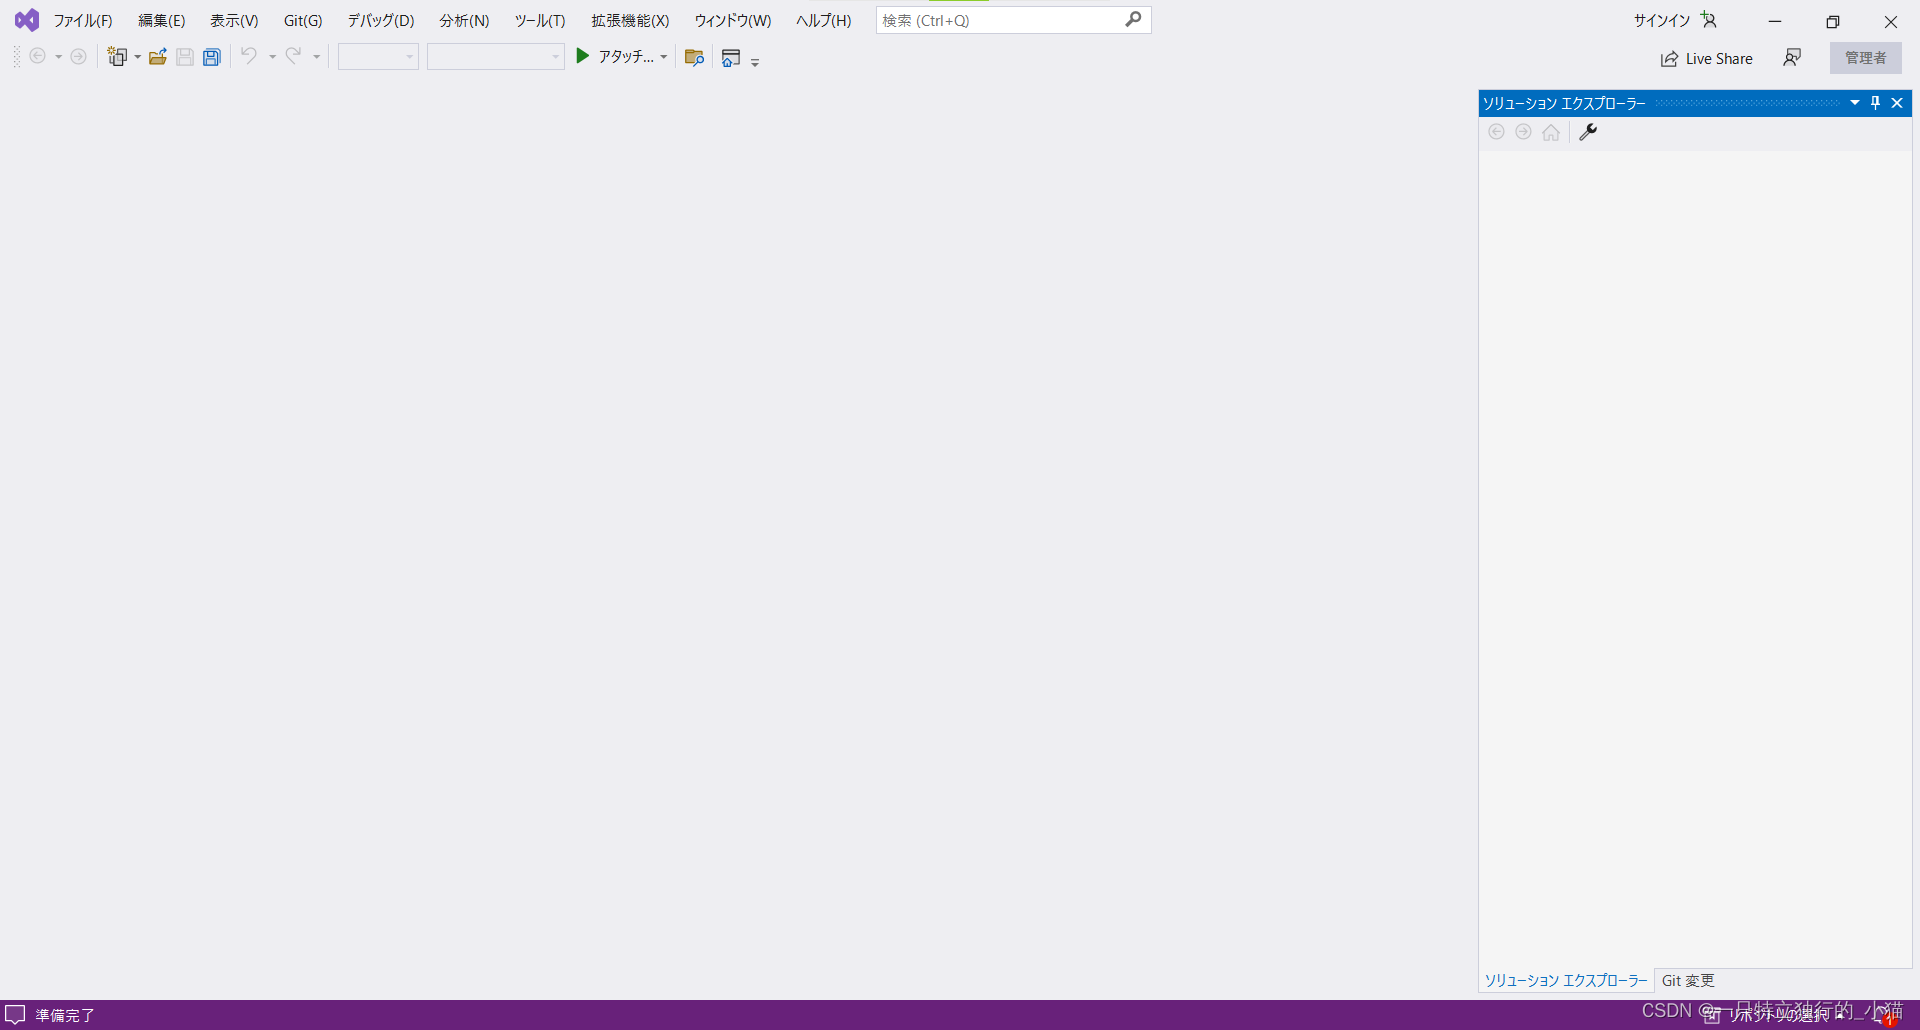 2.Visual Studio下载和安装